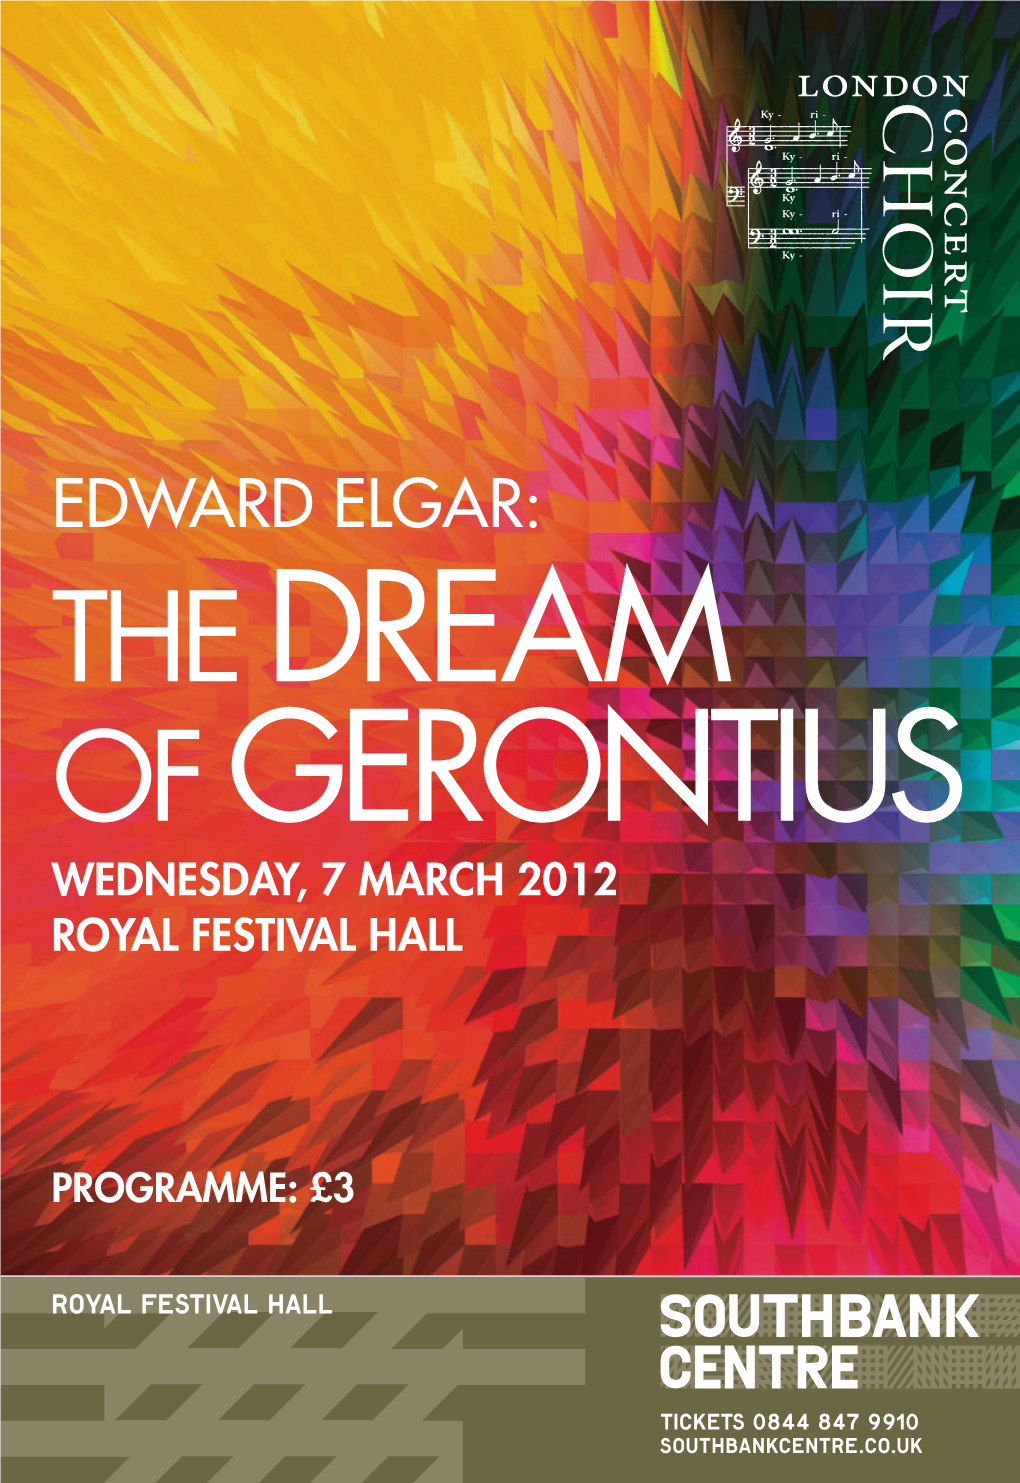 Edward Elgar: the Dream of Gerontius Wednesday, 7 March 2012 Royal Festival Hall